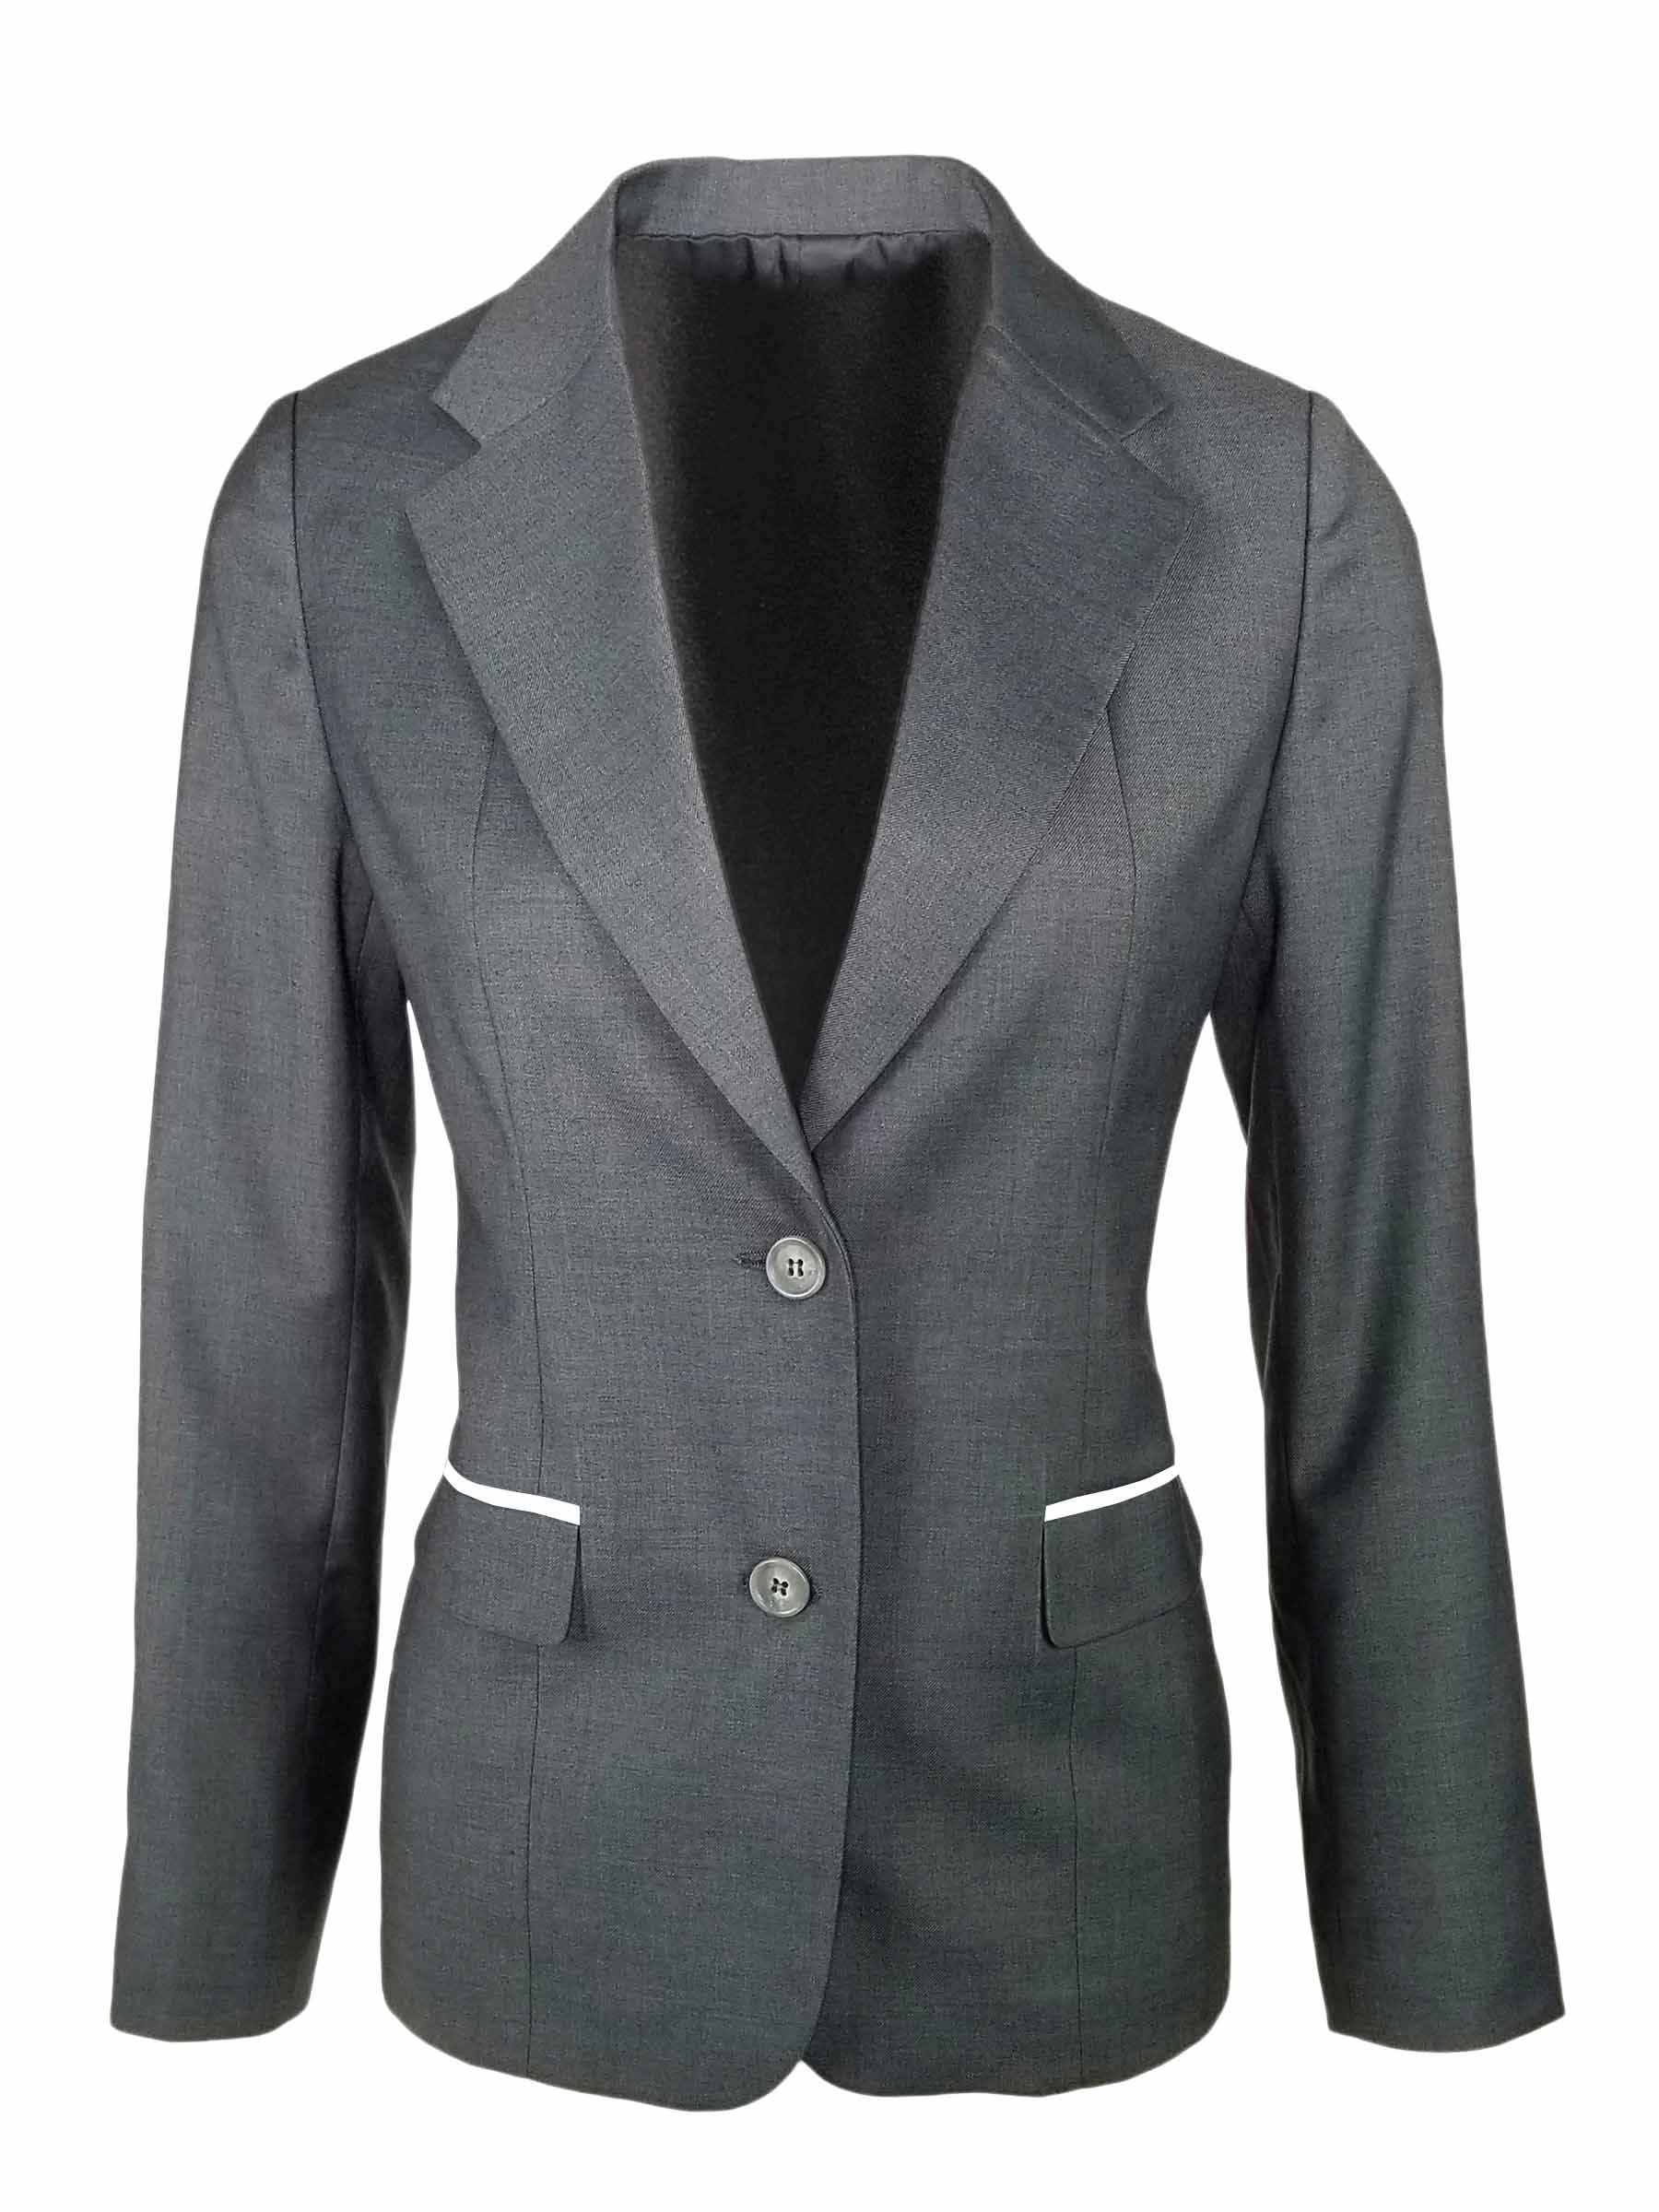 Women's Trim Jacket - Light Grey with White - Uniform Edit